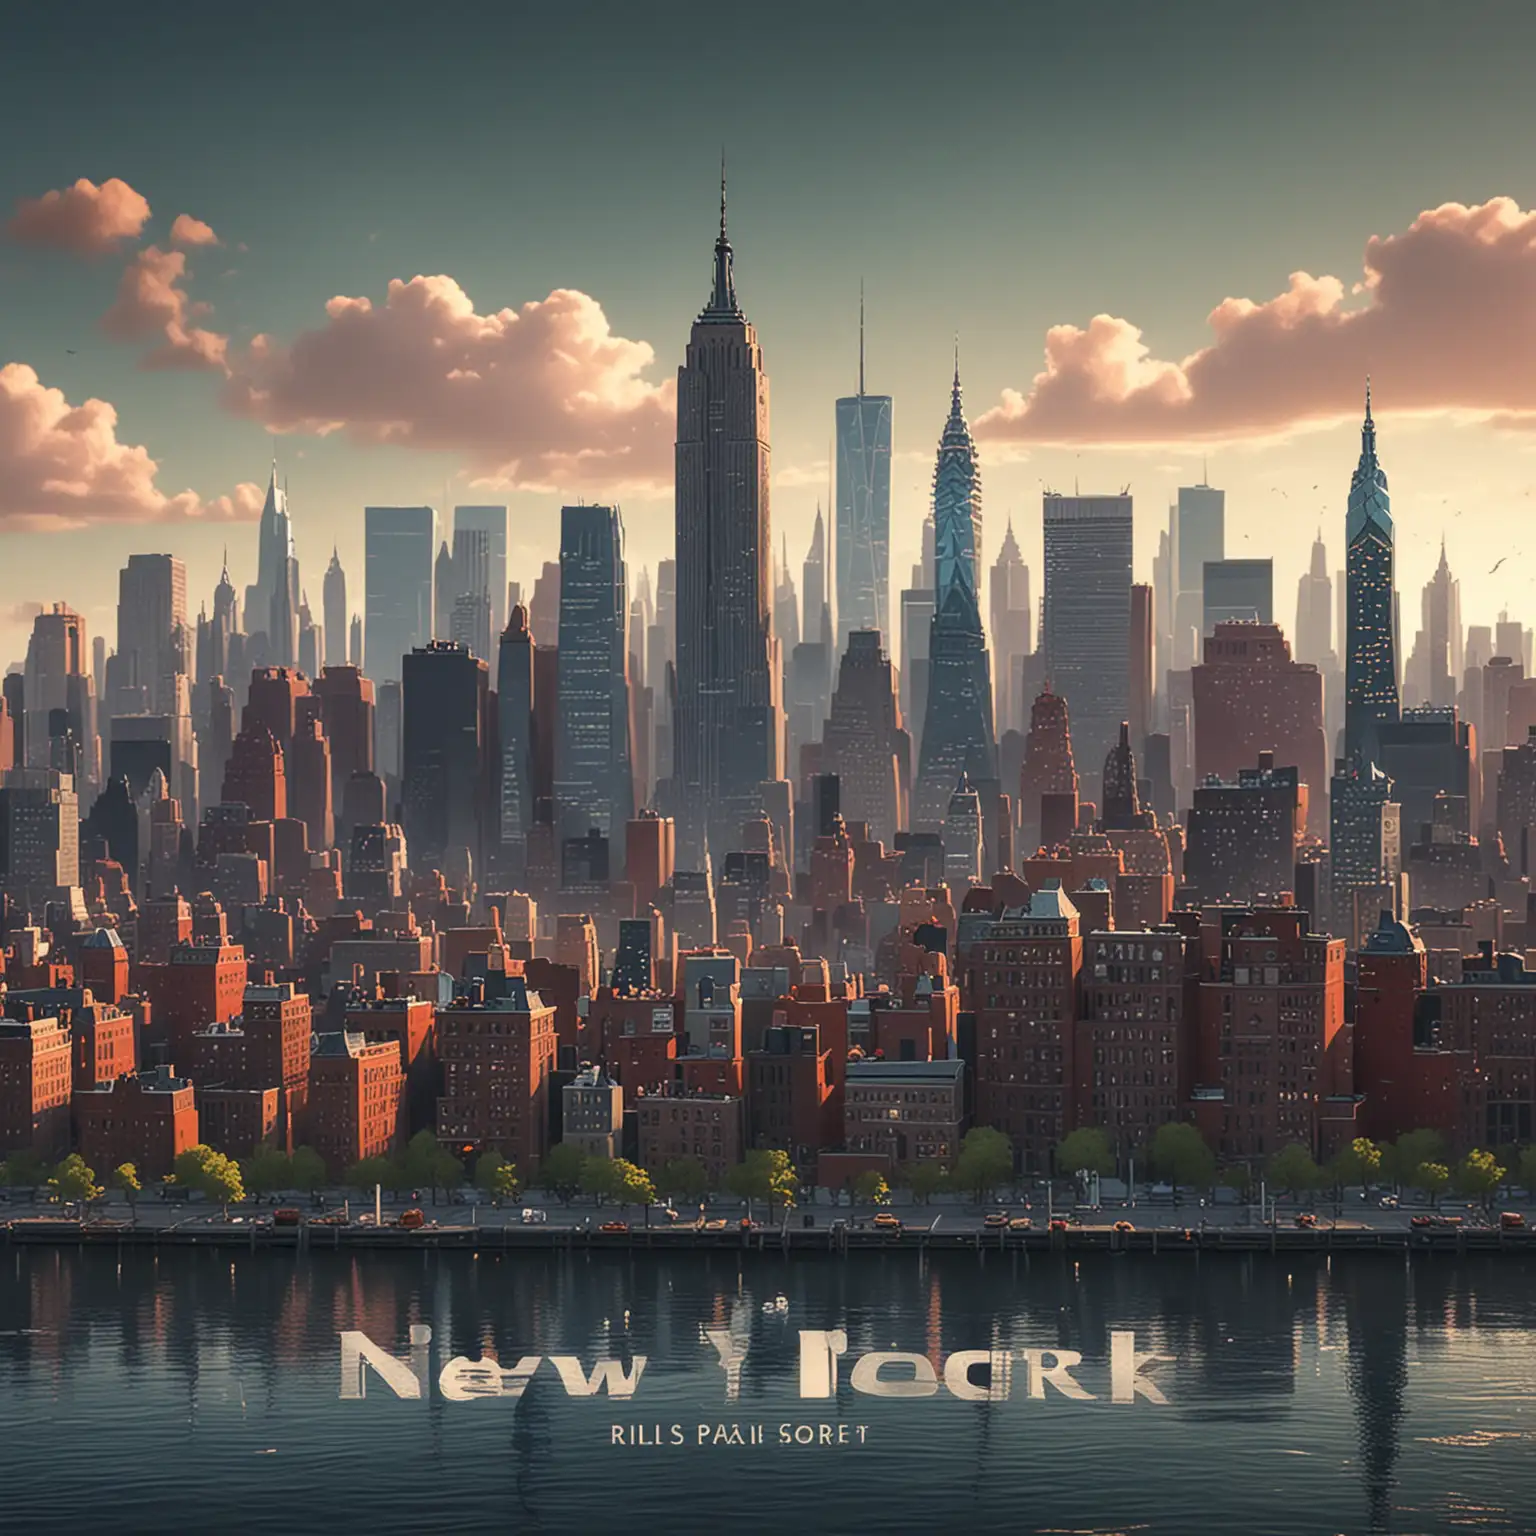 New York City Skyline Illustrated in Vibrant Pixar Style